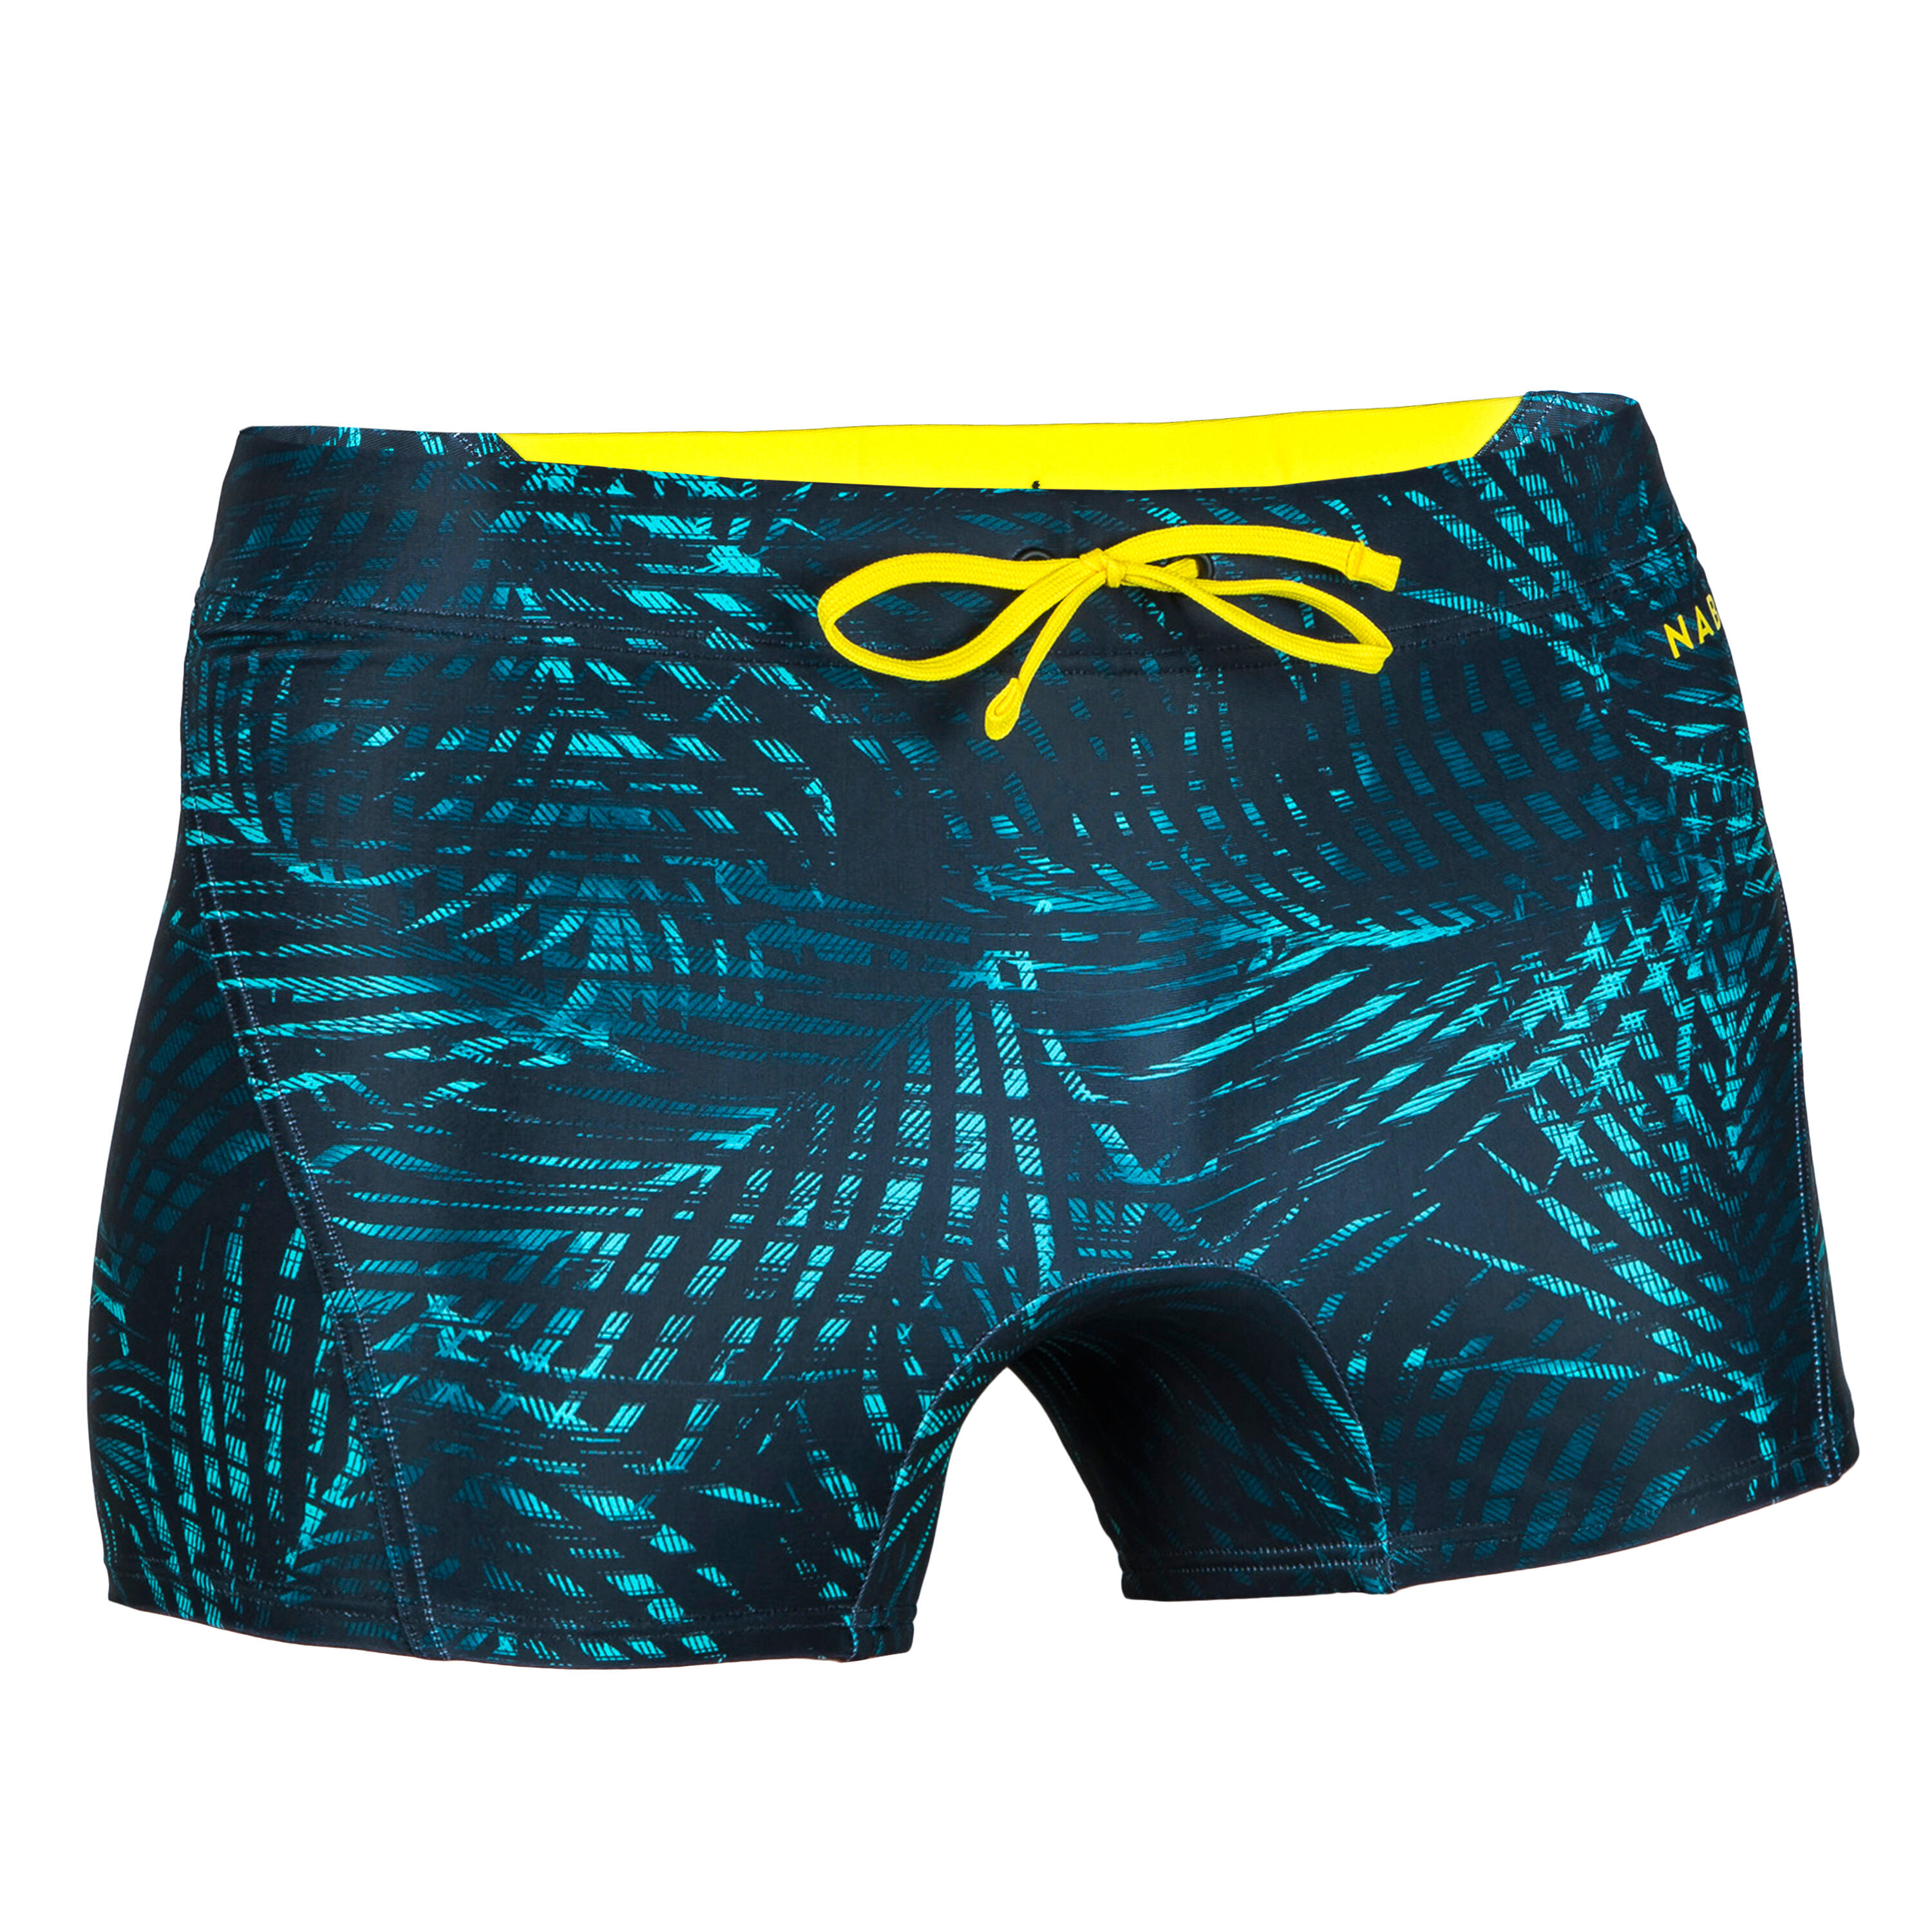 Men’s Swimming Boxer Shorts 100 Full - Black Yellow 5/5